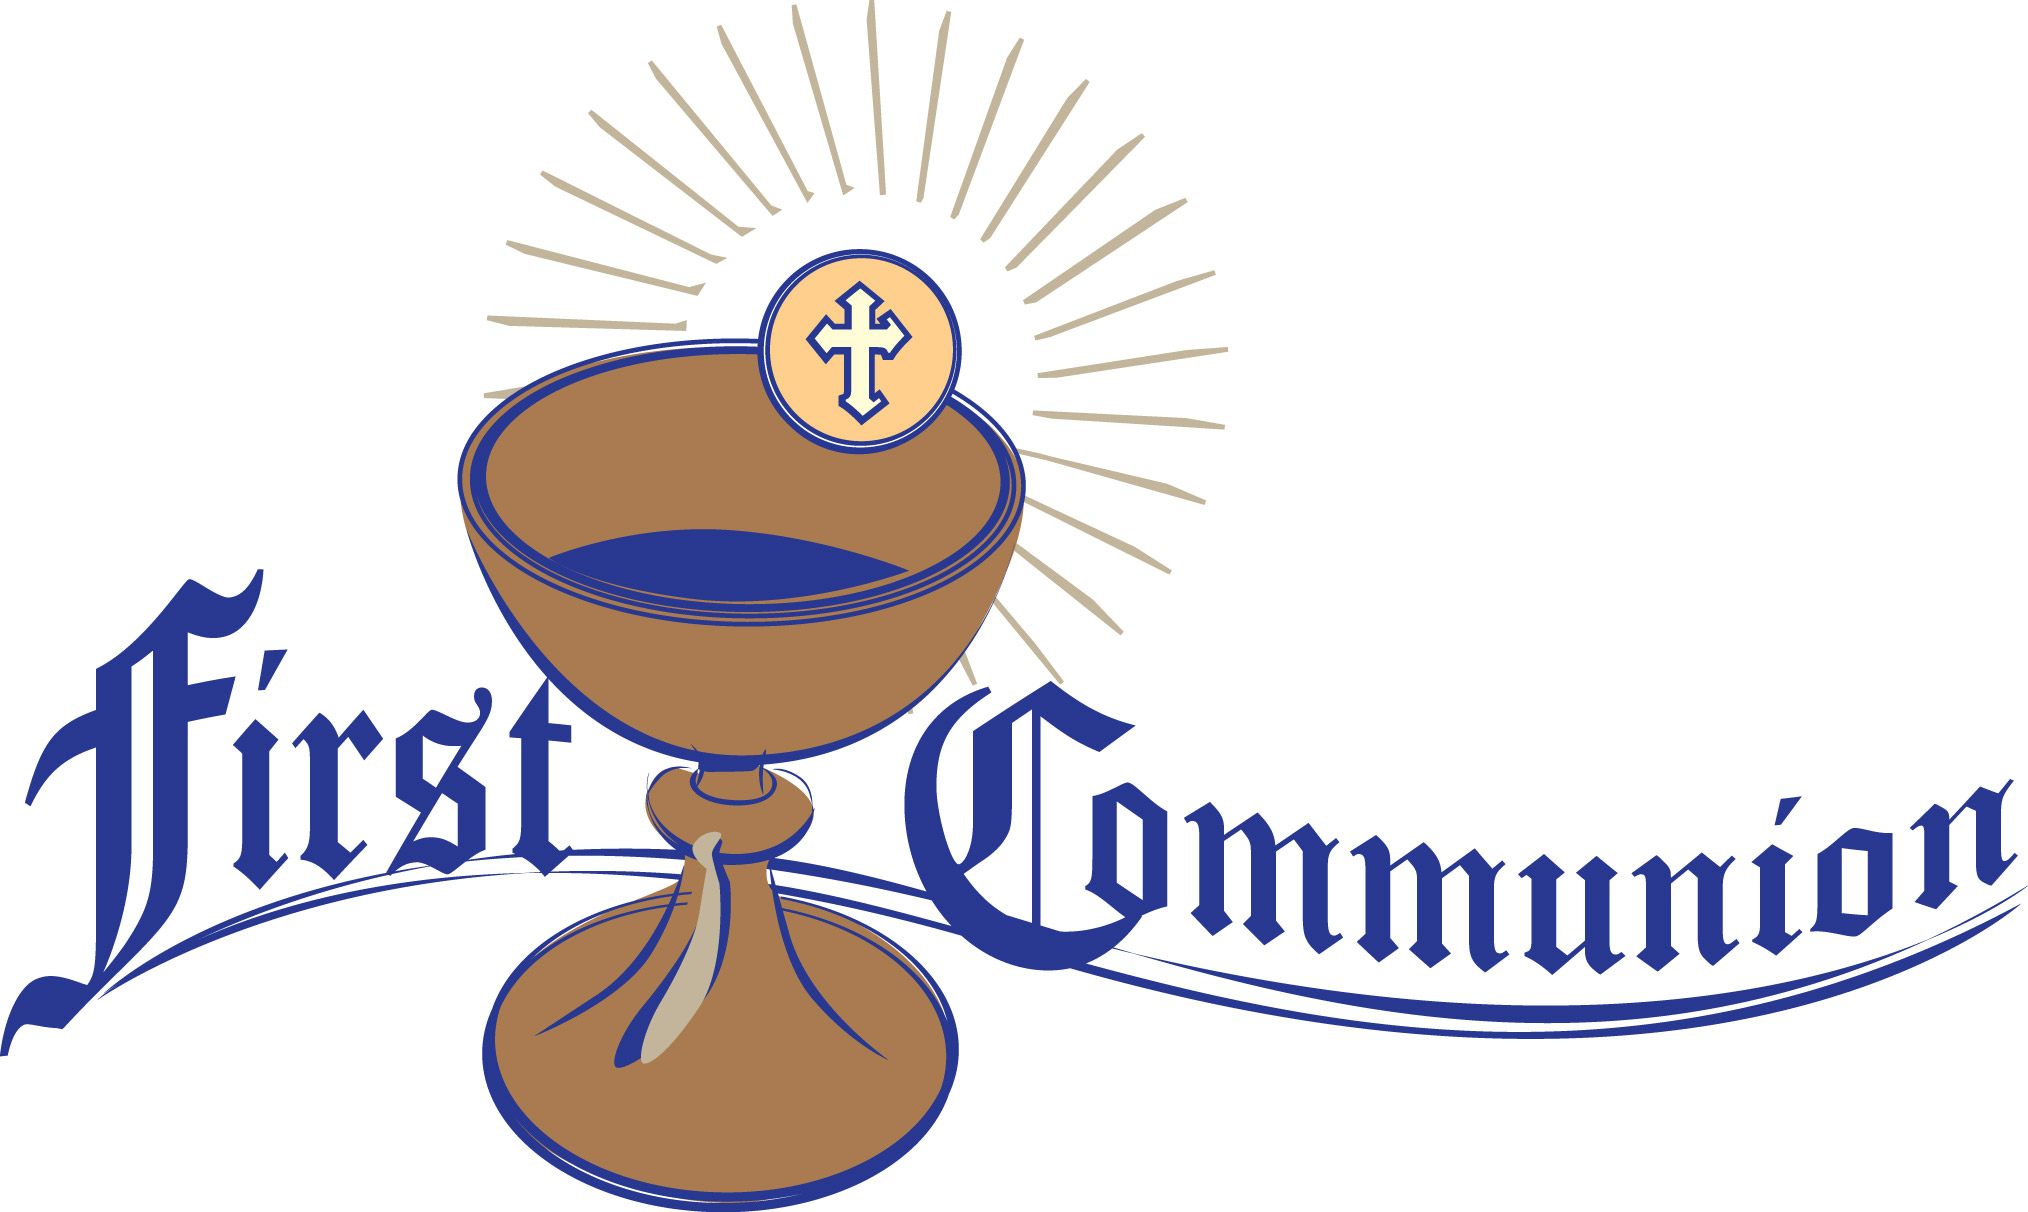 first communion